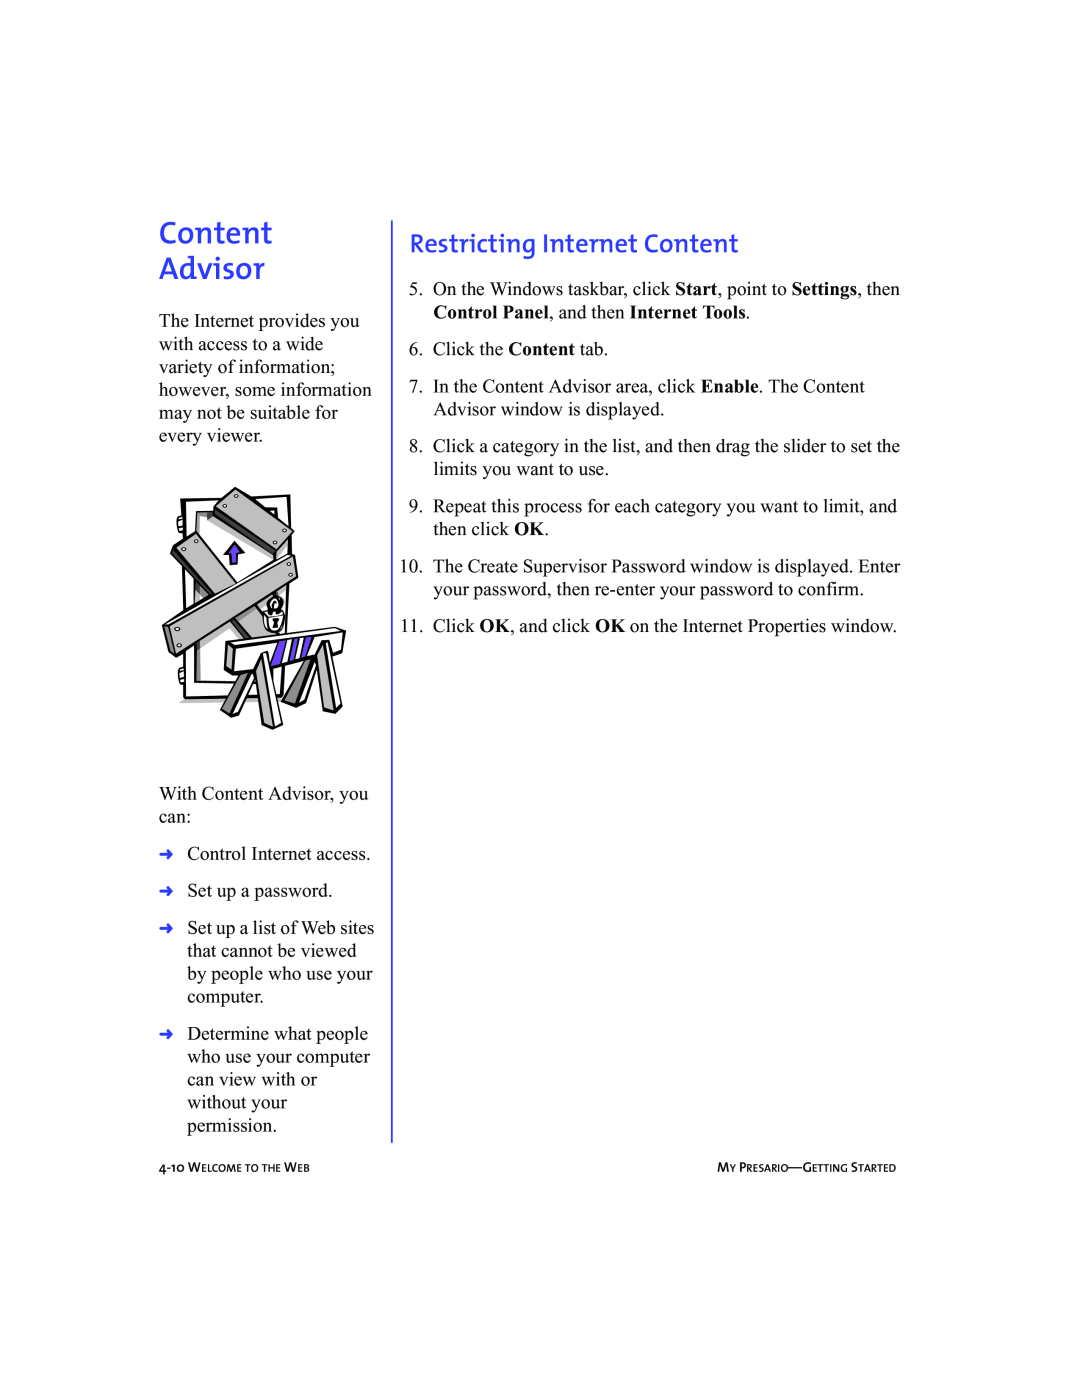 Compaq 5BW474 manual Content Advisor, Restricting Internet Content 